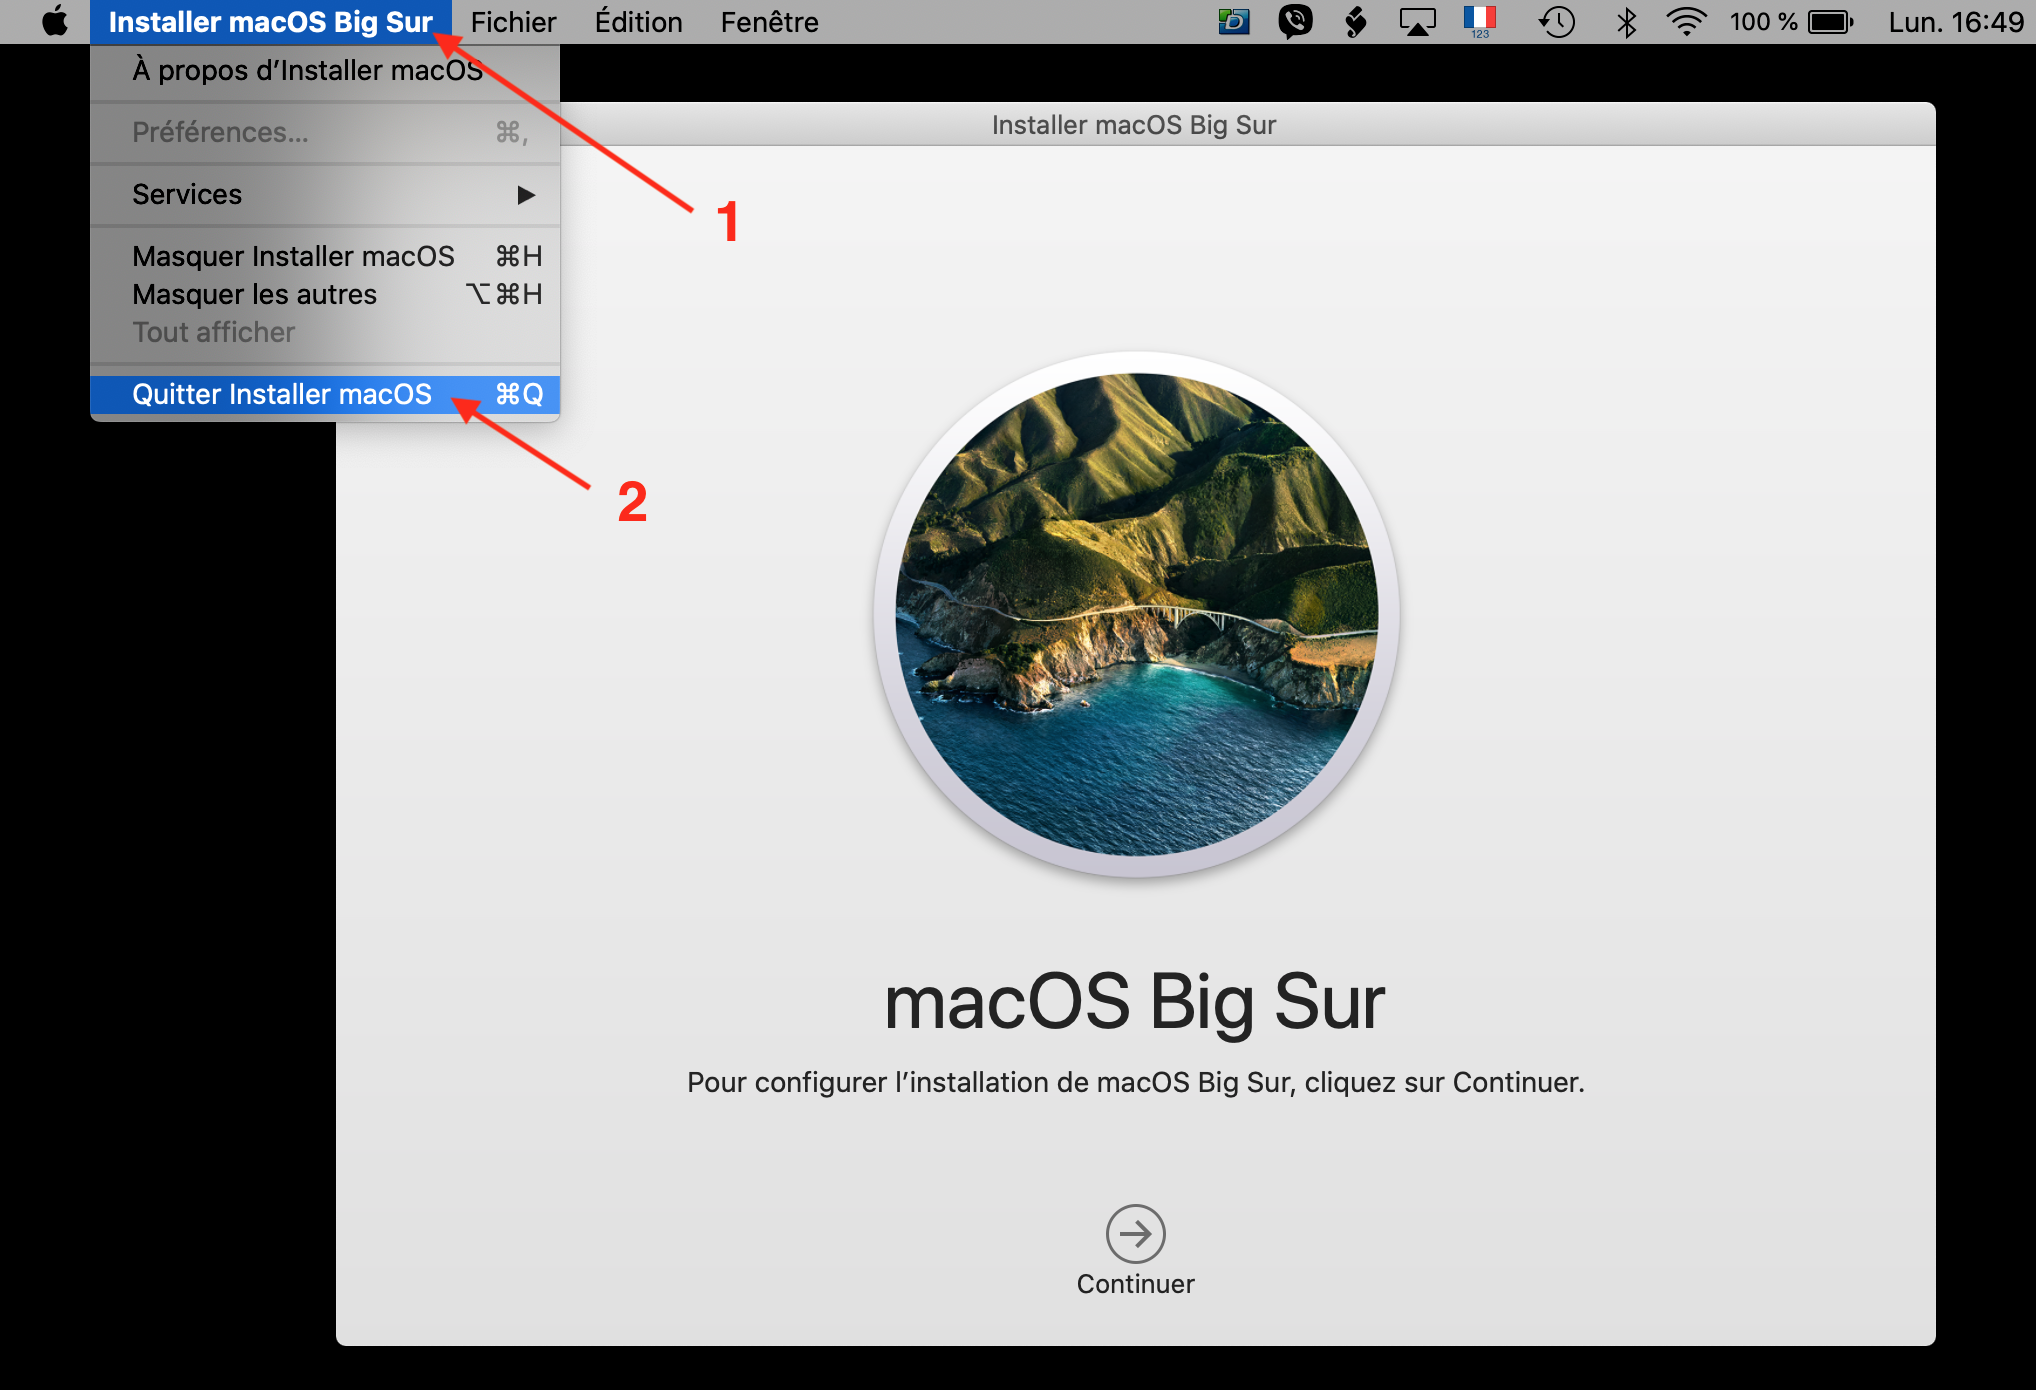 Clé USB installation Mac OS 10.14 Mojave